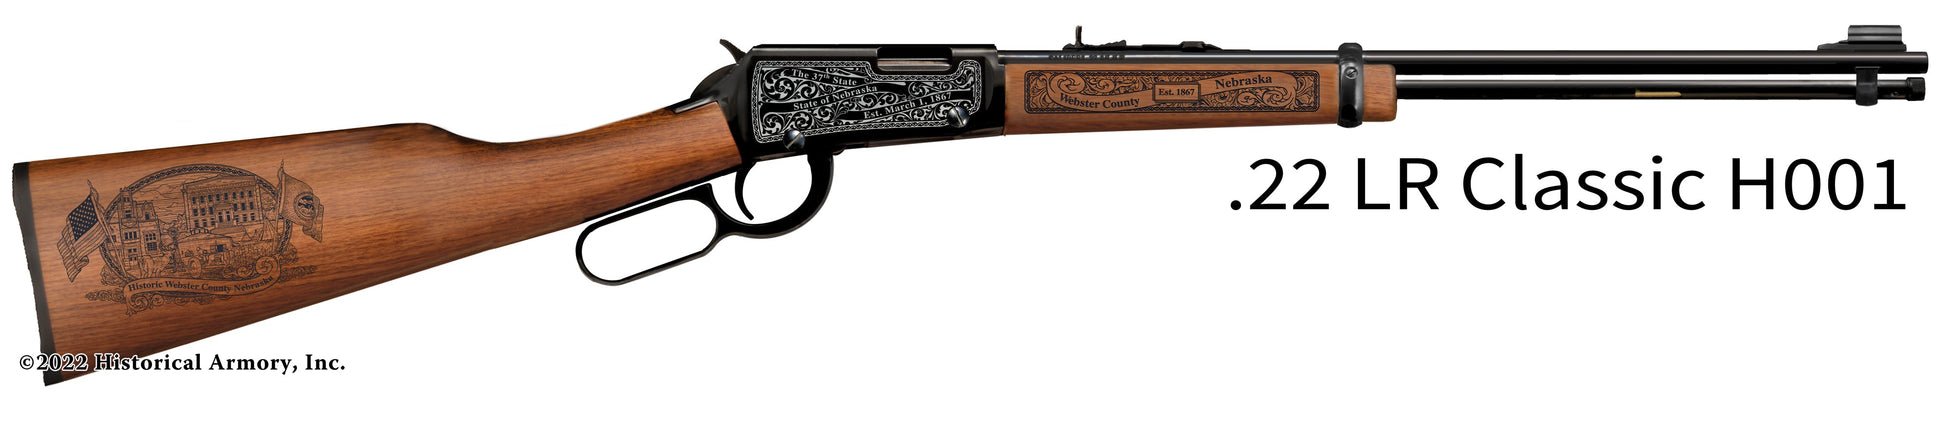 Webster County Nebraska Engraved Henry H001 Rifle